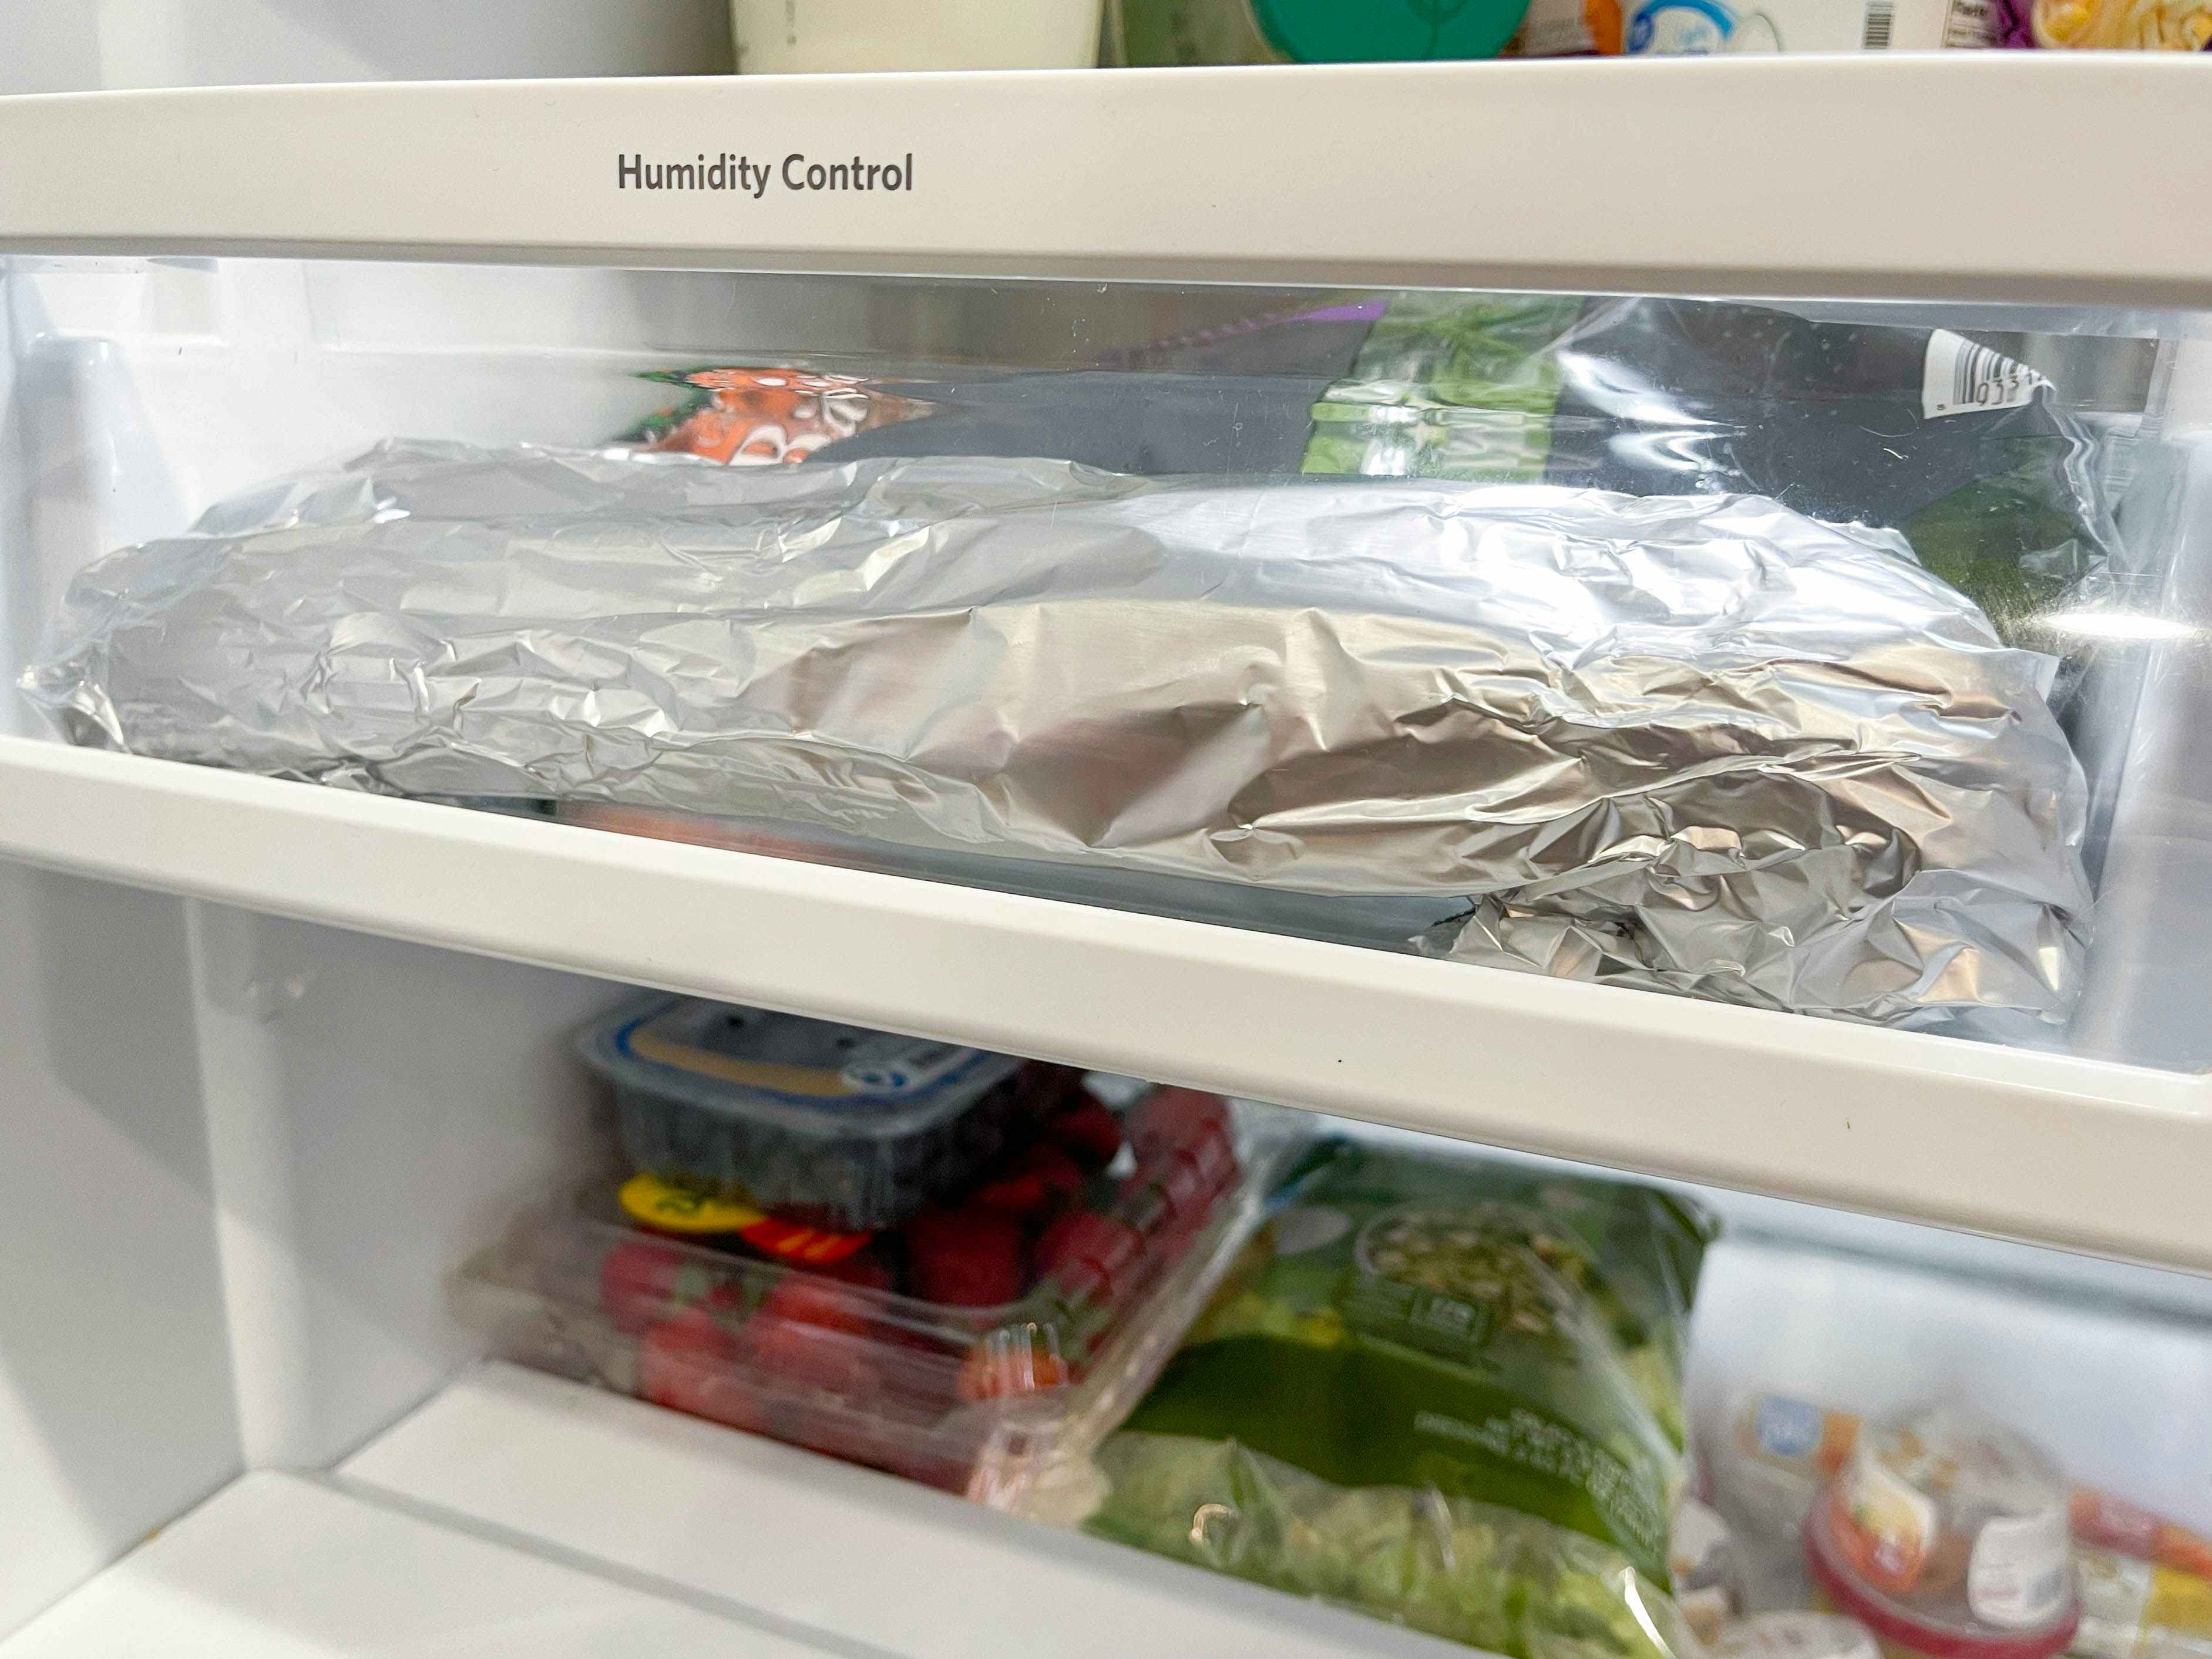 celery wrapped in foil in fridge crisper drawer